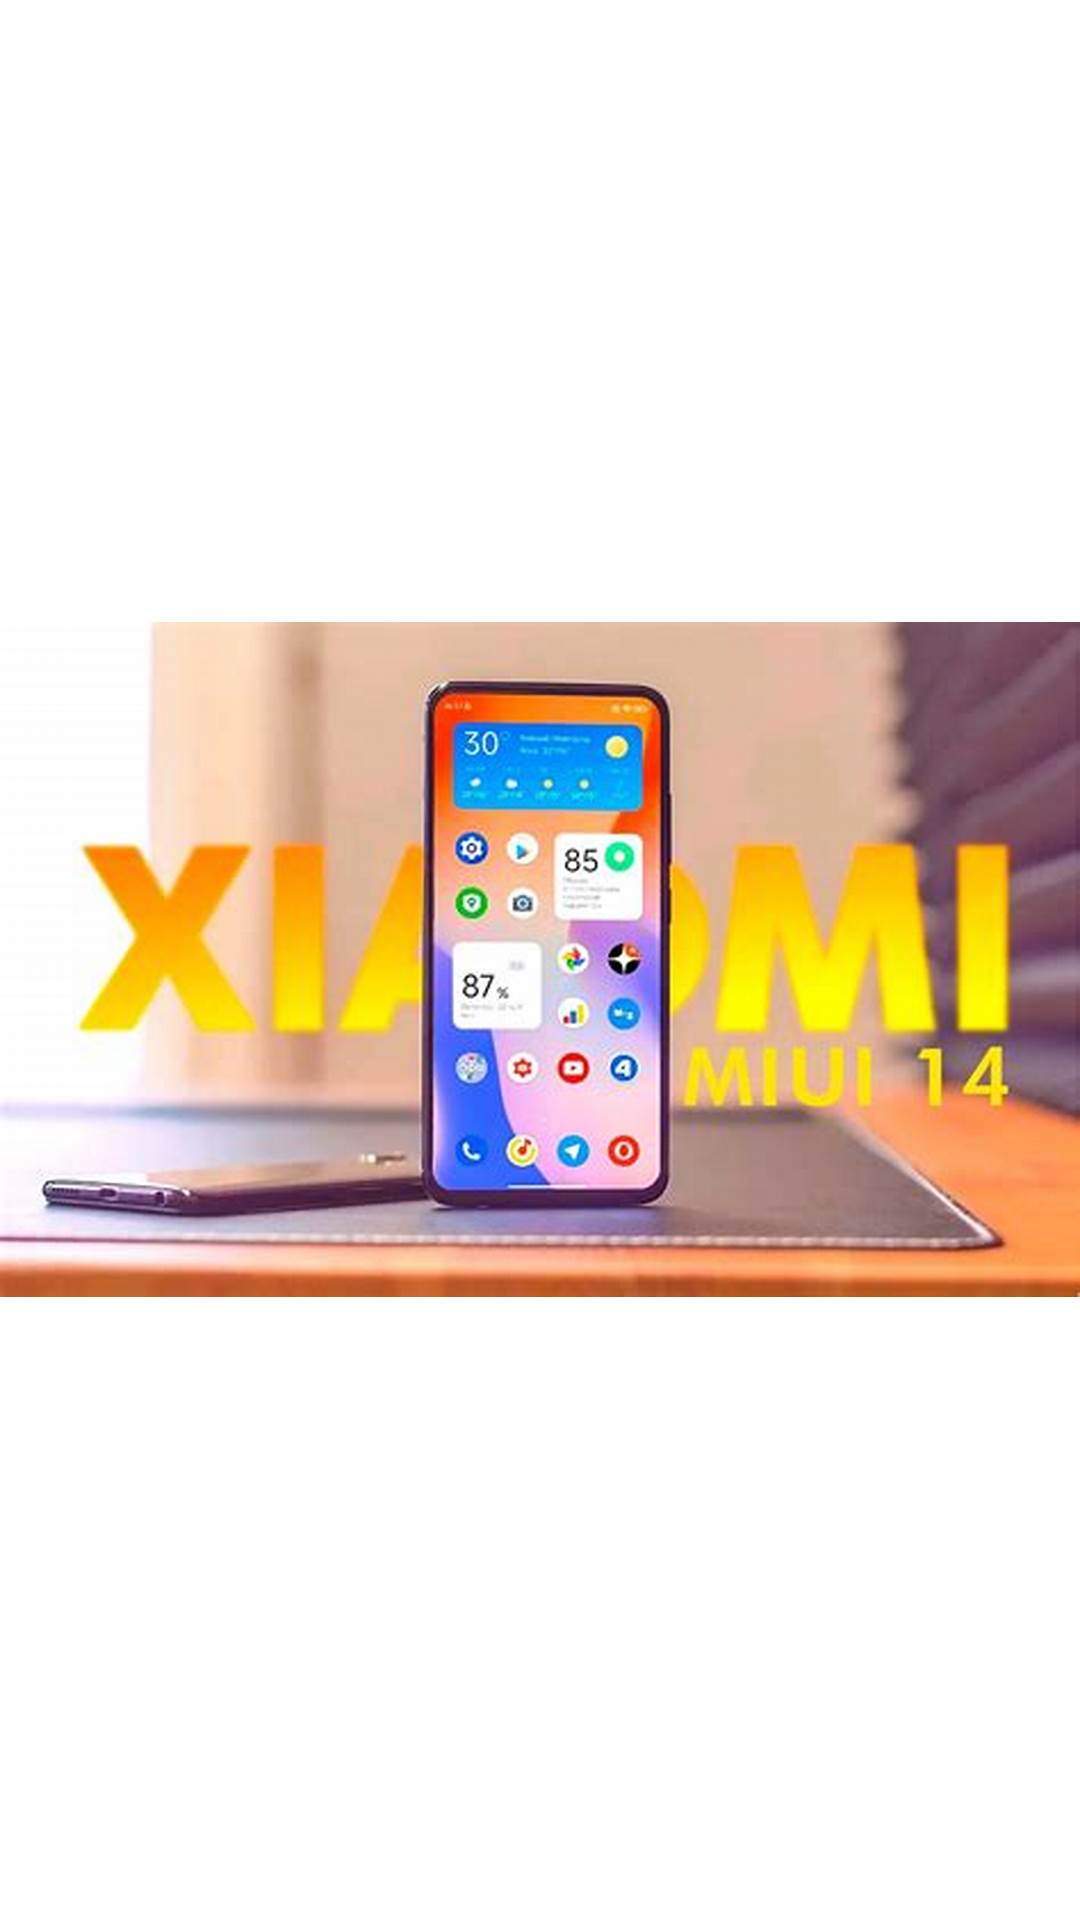 MIUI Xiaomi